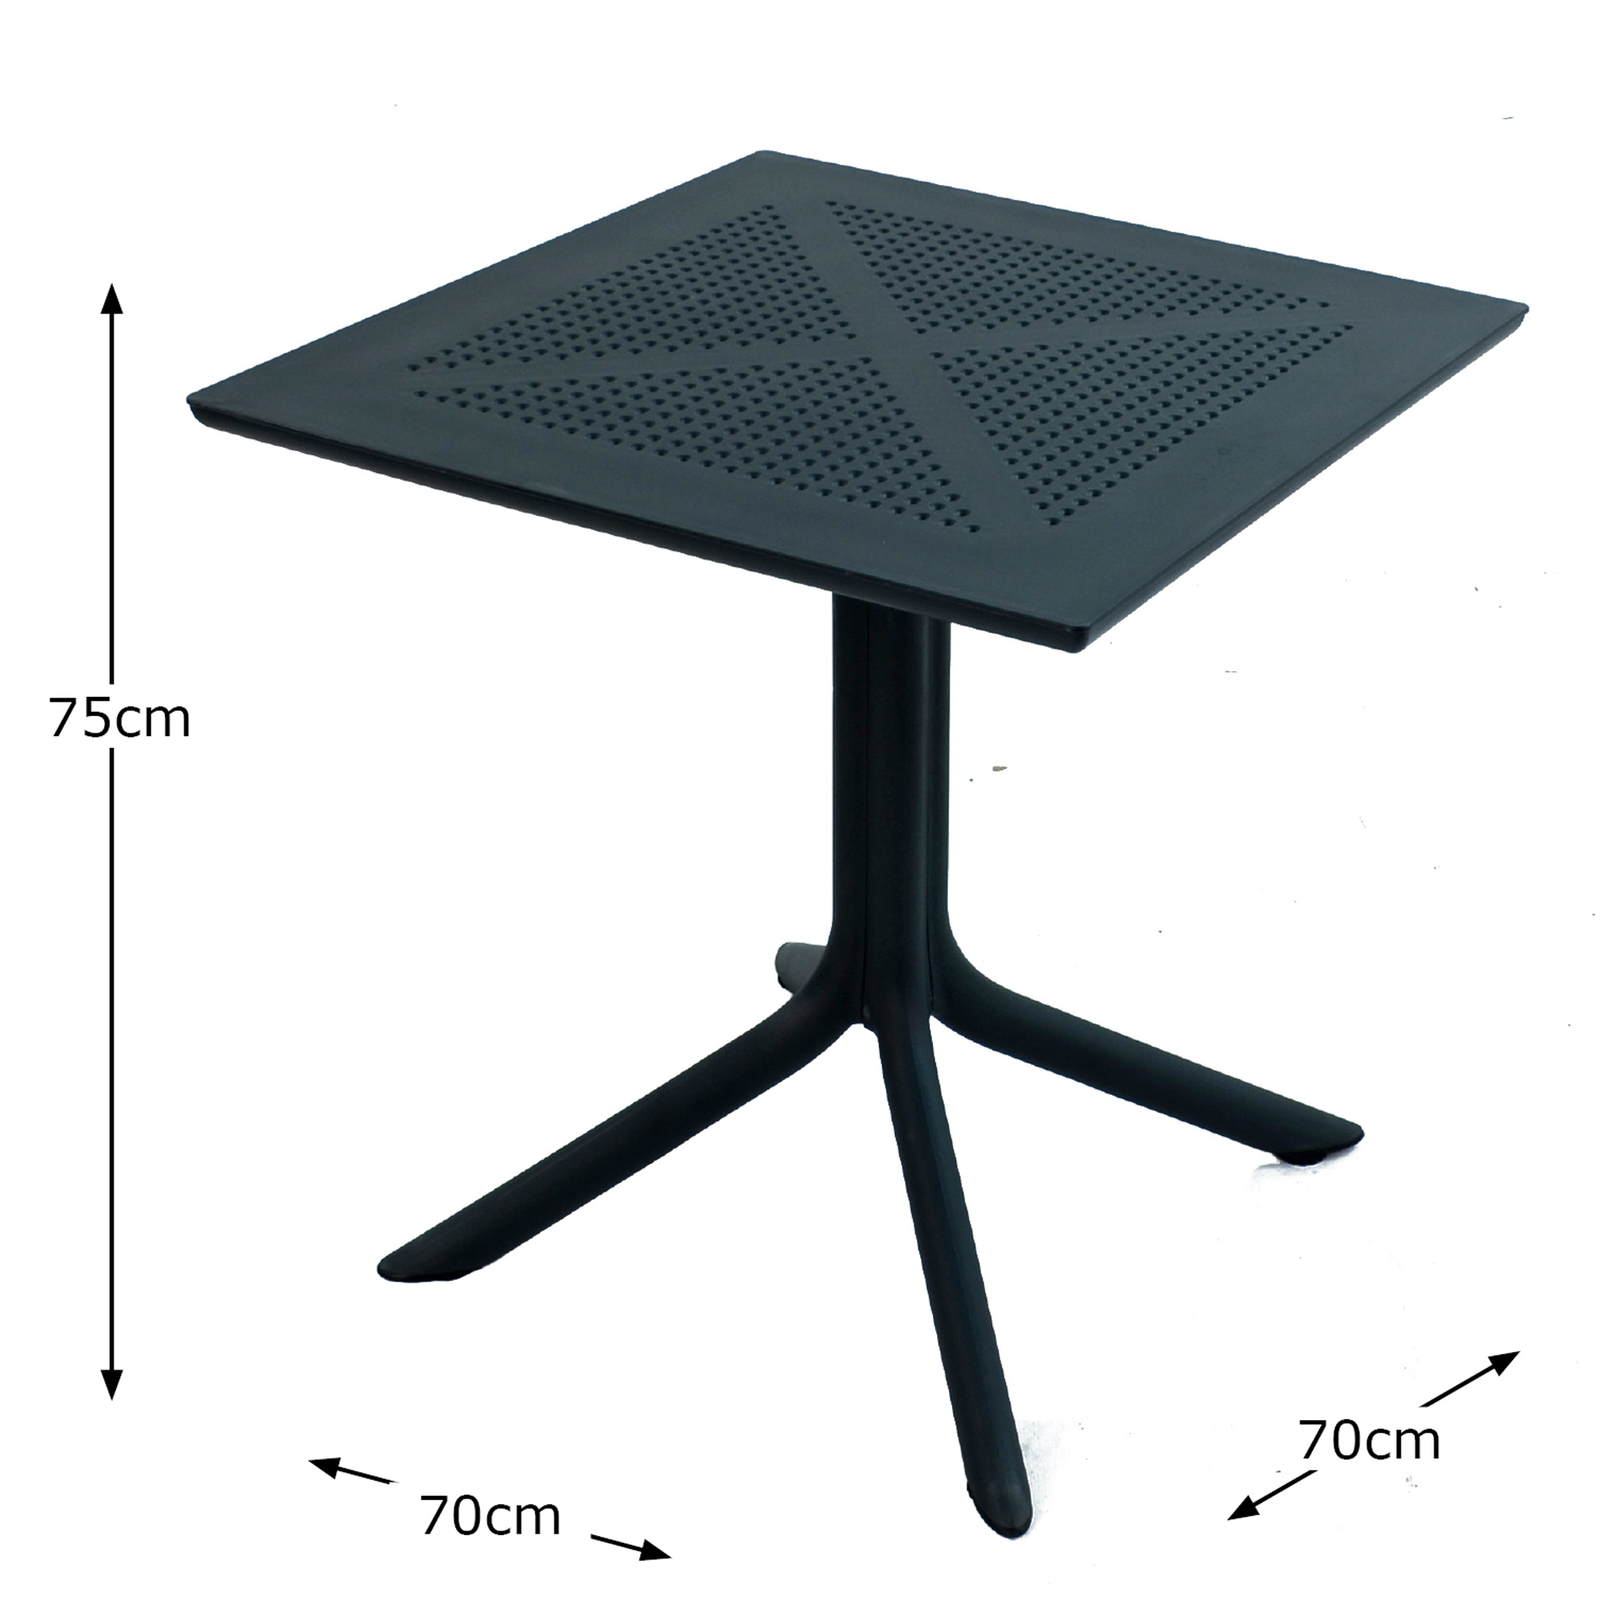 Nardi Clip 70cm Garden Resin Table in Anthracite Grey Tables Nardi Default Title  